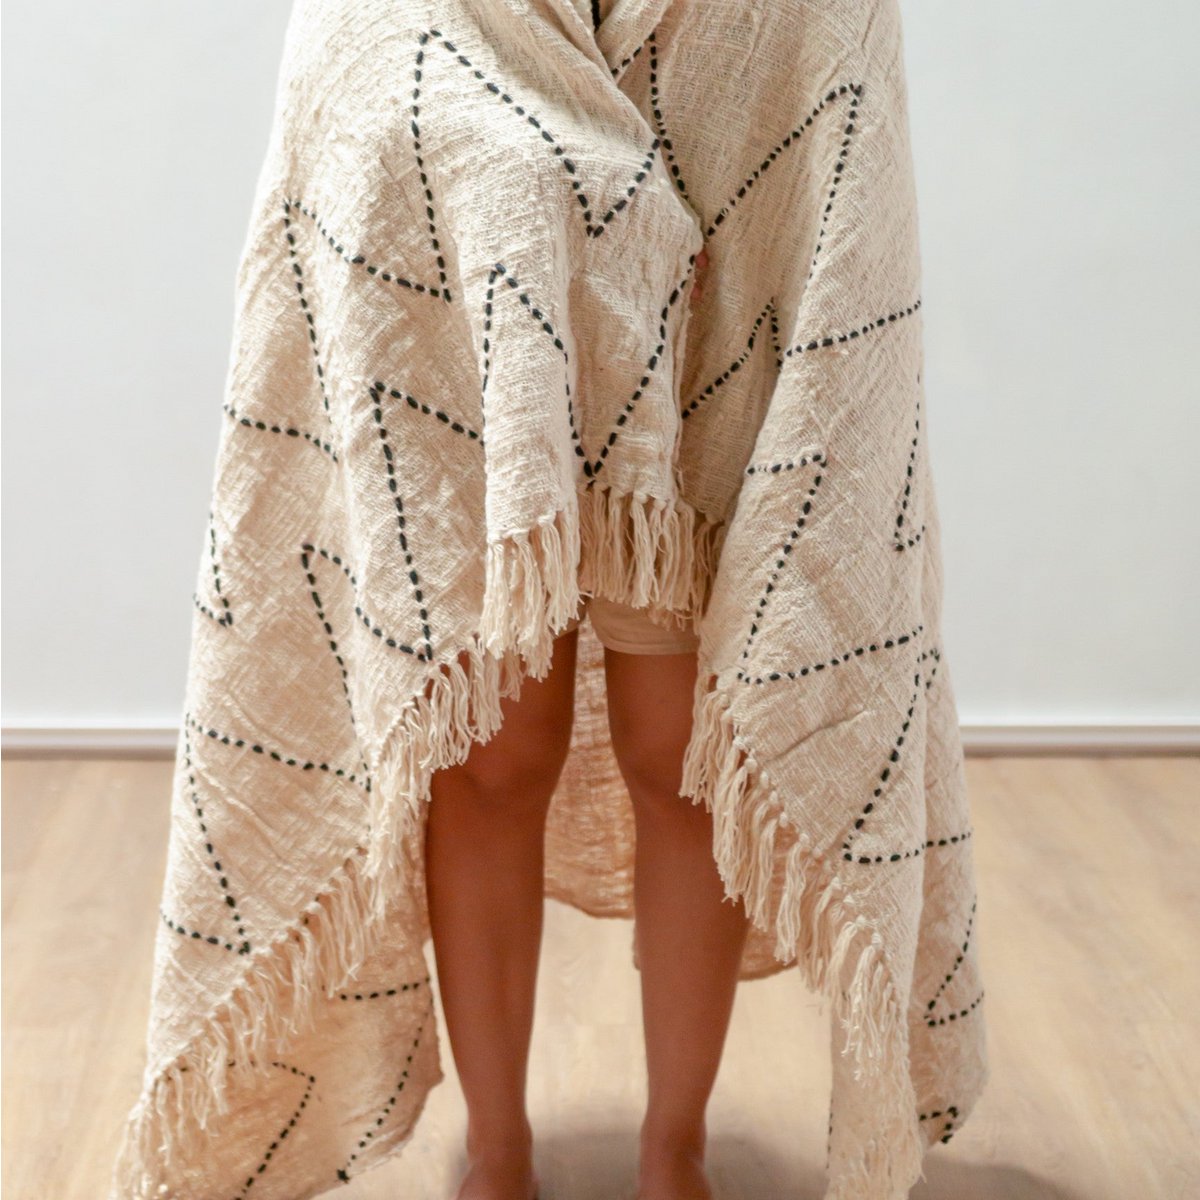 Baumwolldecke | Tagesdecke | Bettdecke | Sofadecke 140x200 cm LINGGAH handgewebt aus Baumwolle